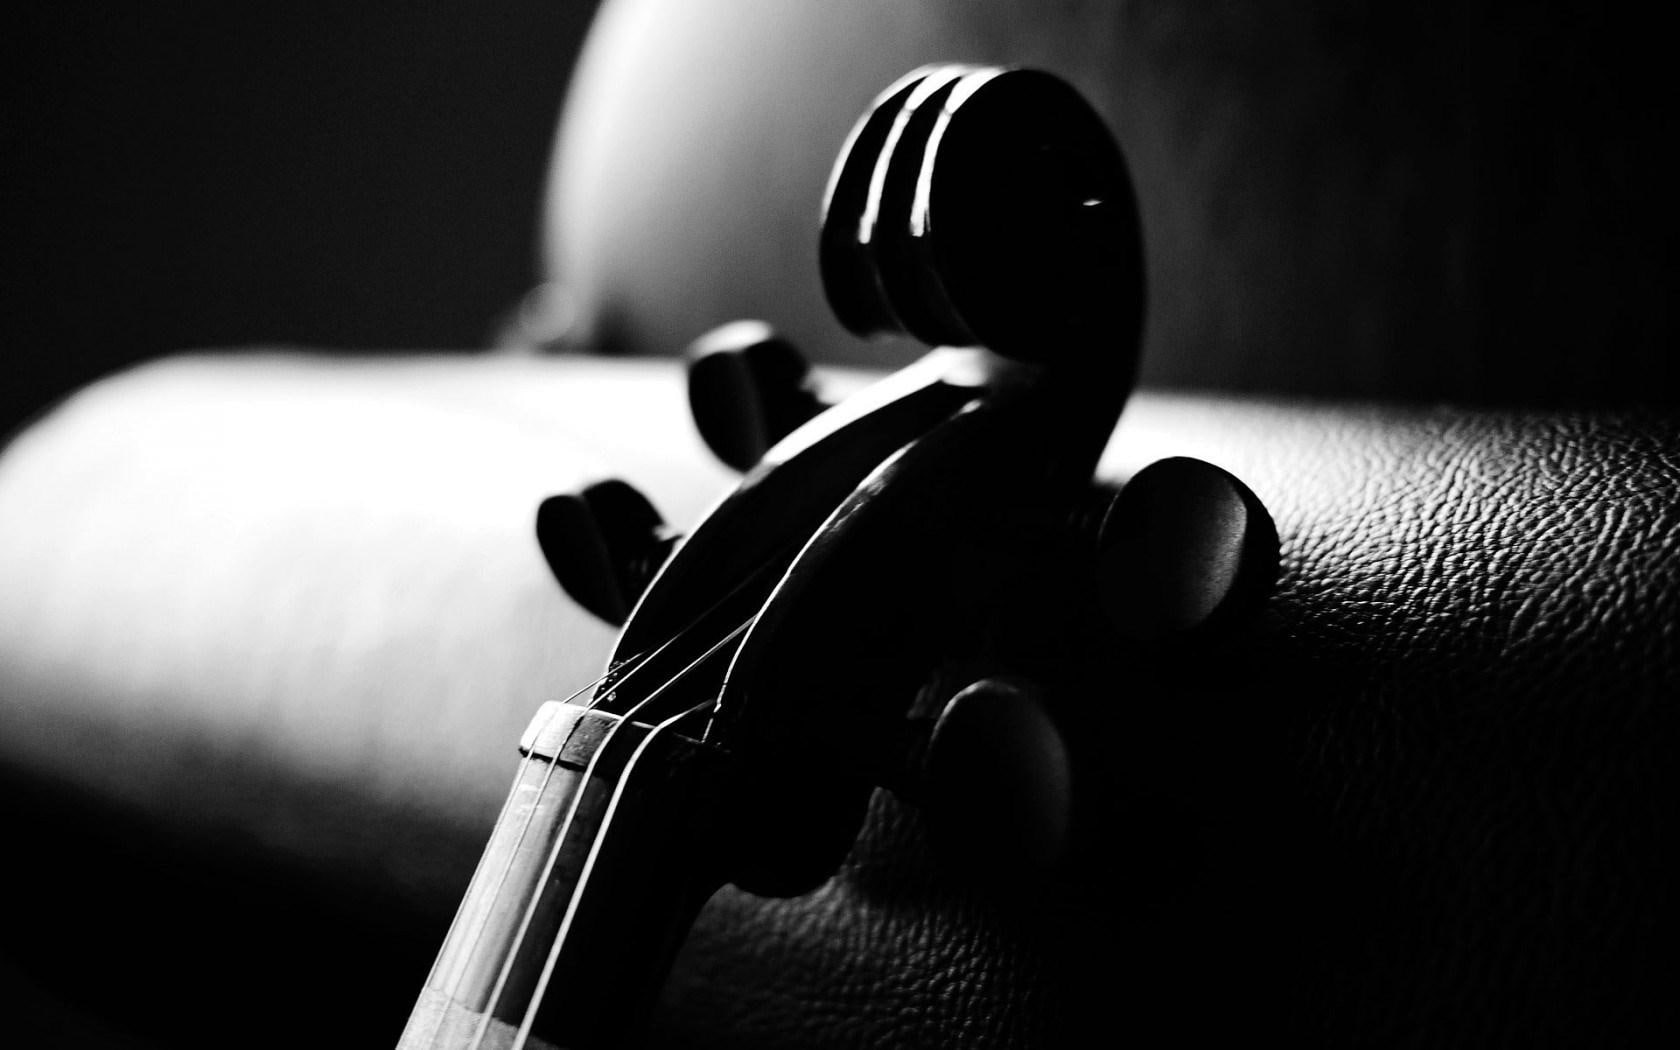 Violin Musical Instrument, black violin headstock